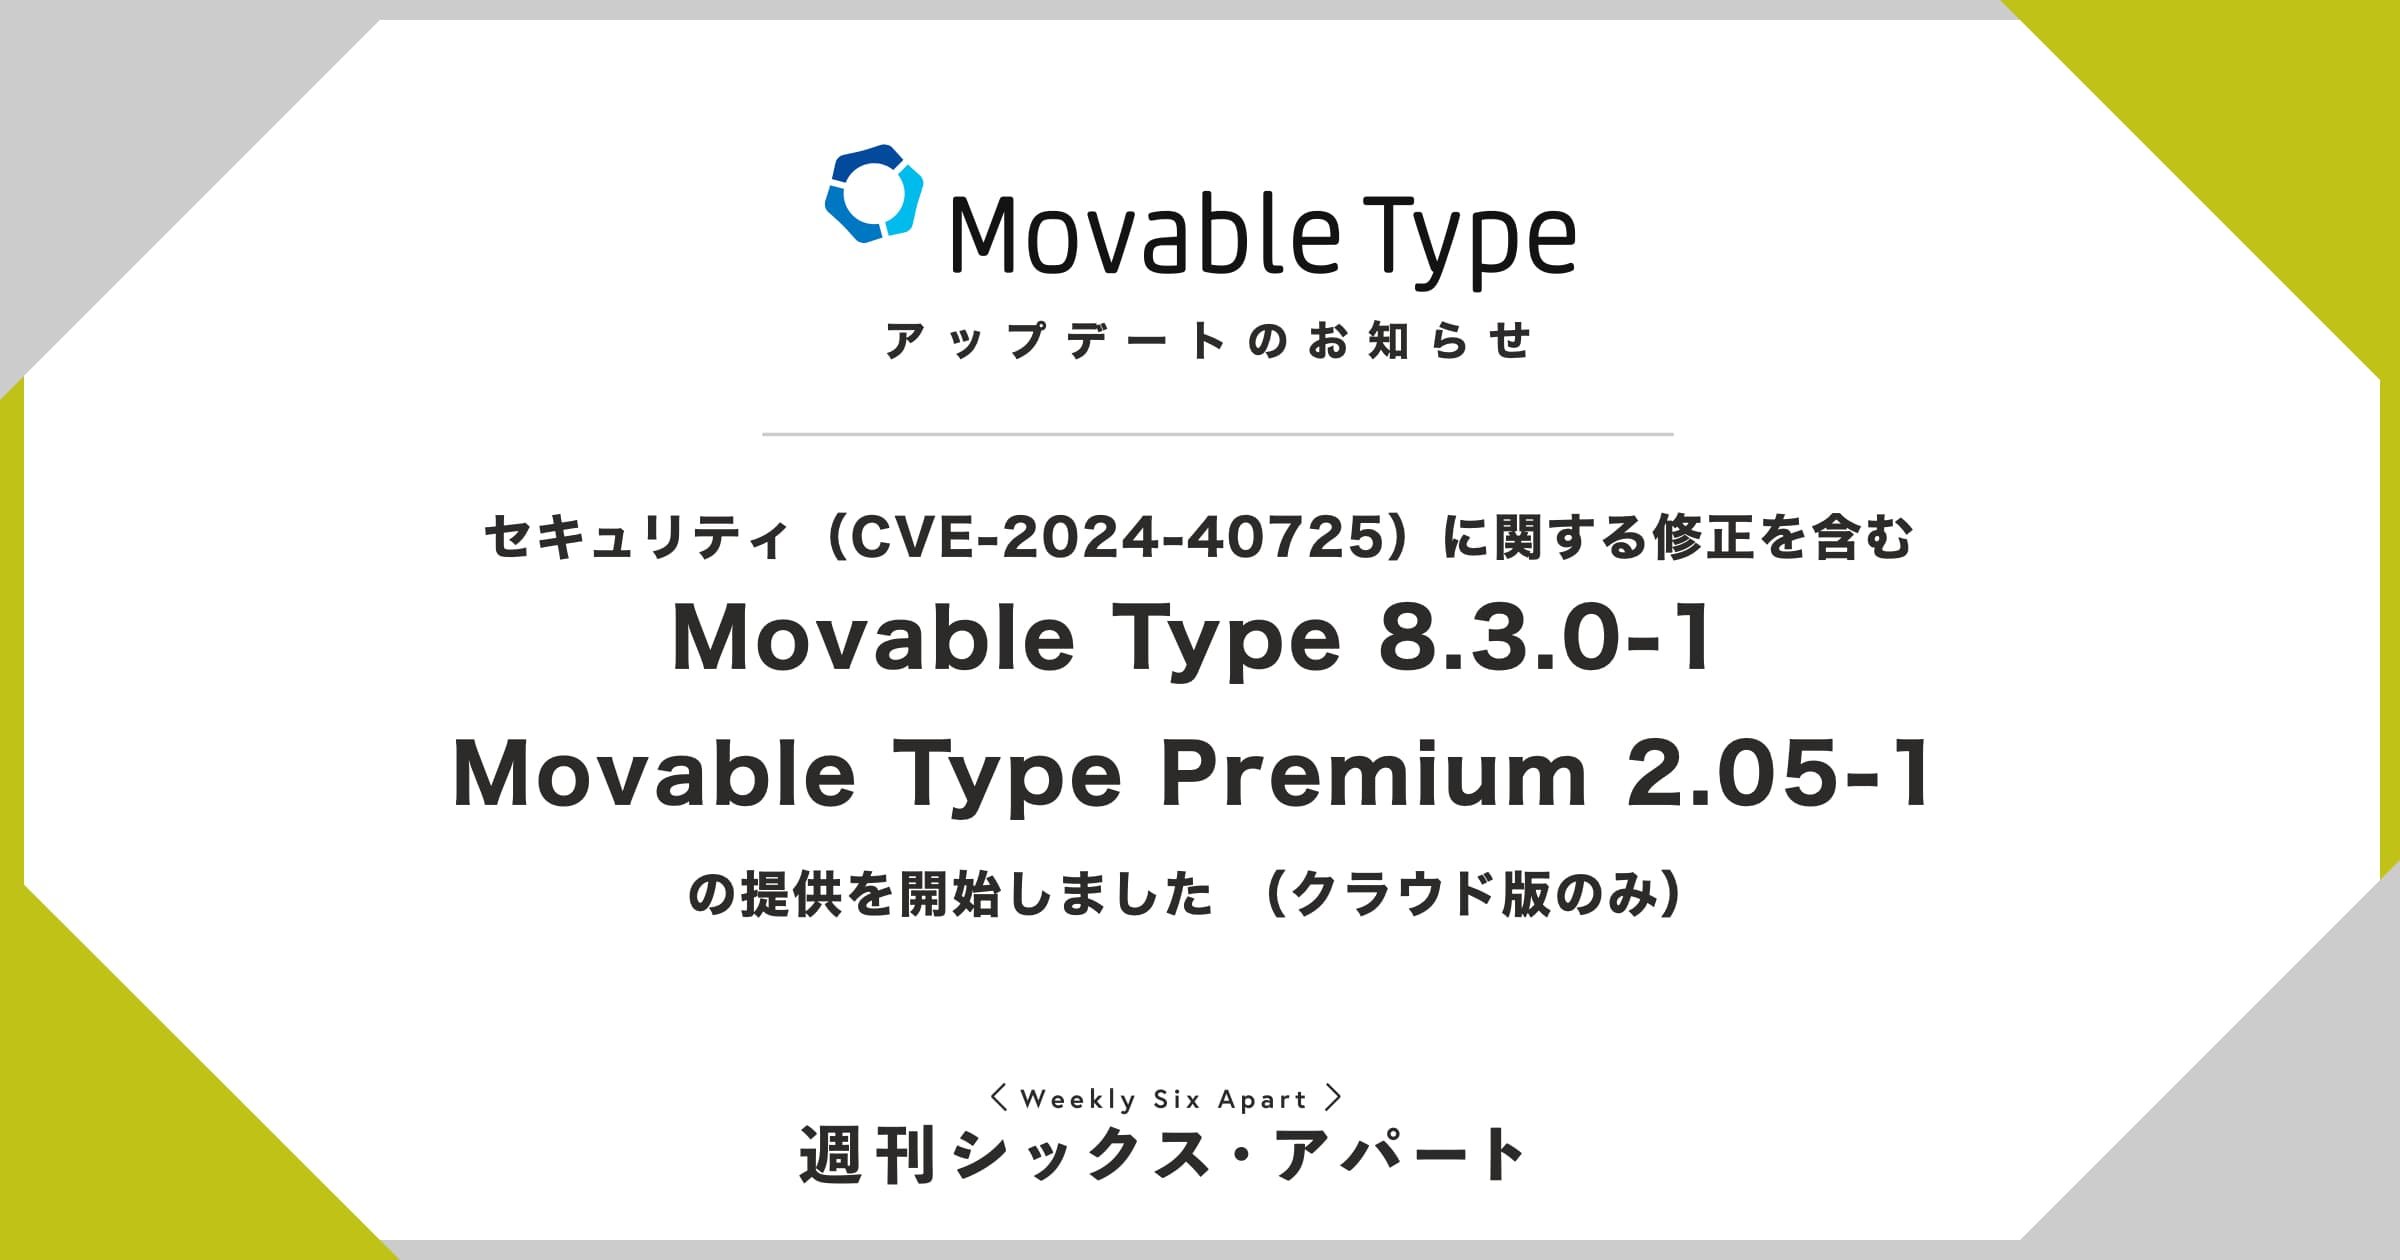 Movable Type 8.3.0-1、Movable Type Premium 2.05-1 の提供を開始しました #週刊SA 